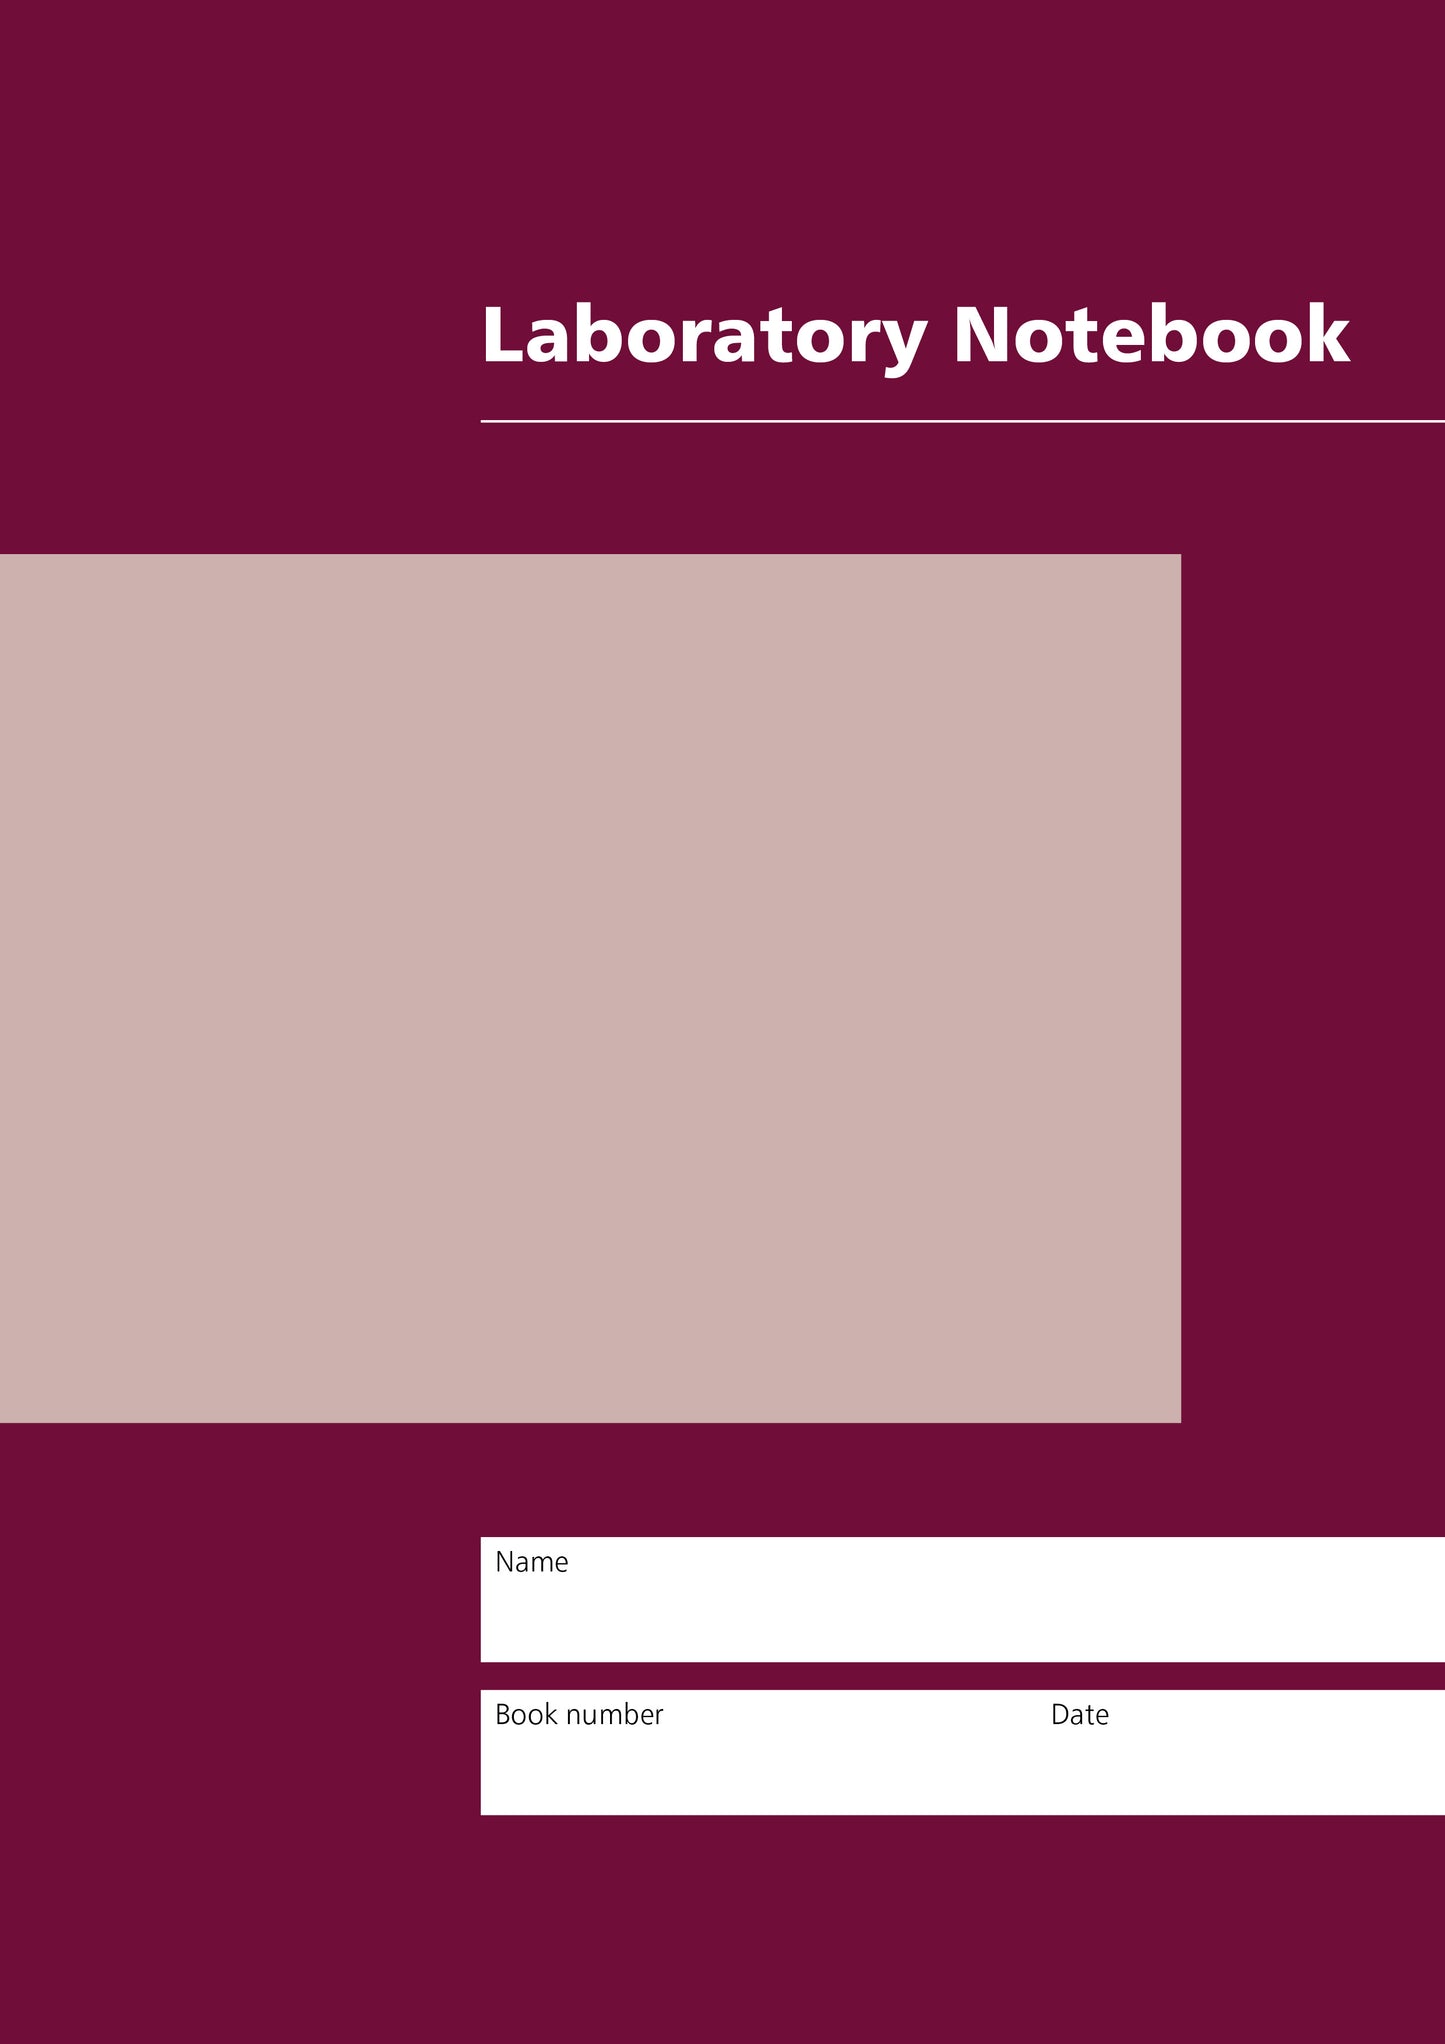 Mitchells Laboratory Notebooks Maroon A02